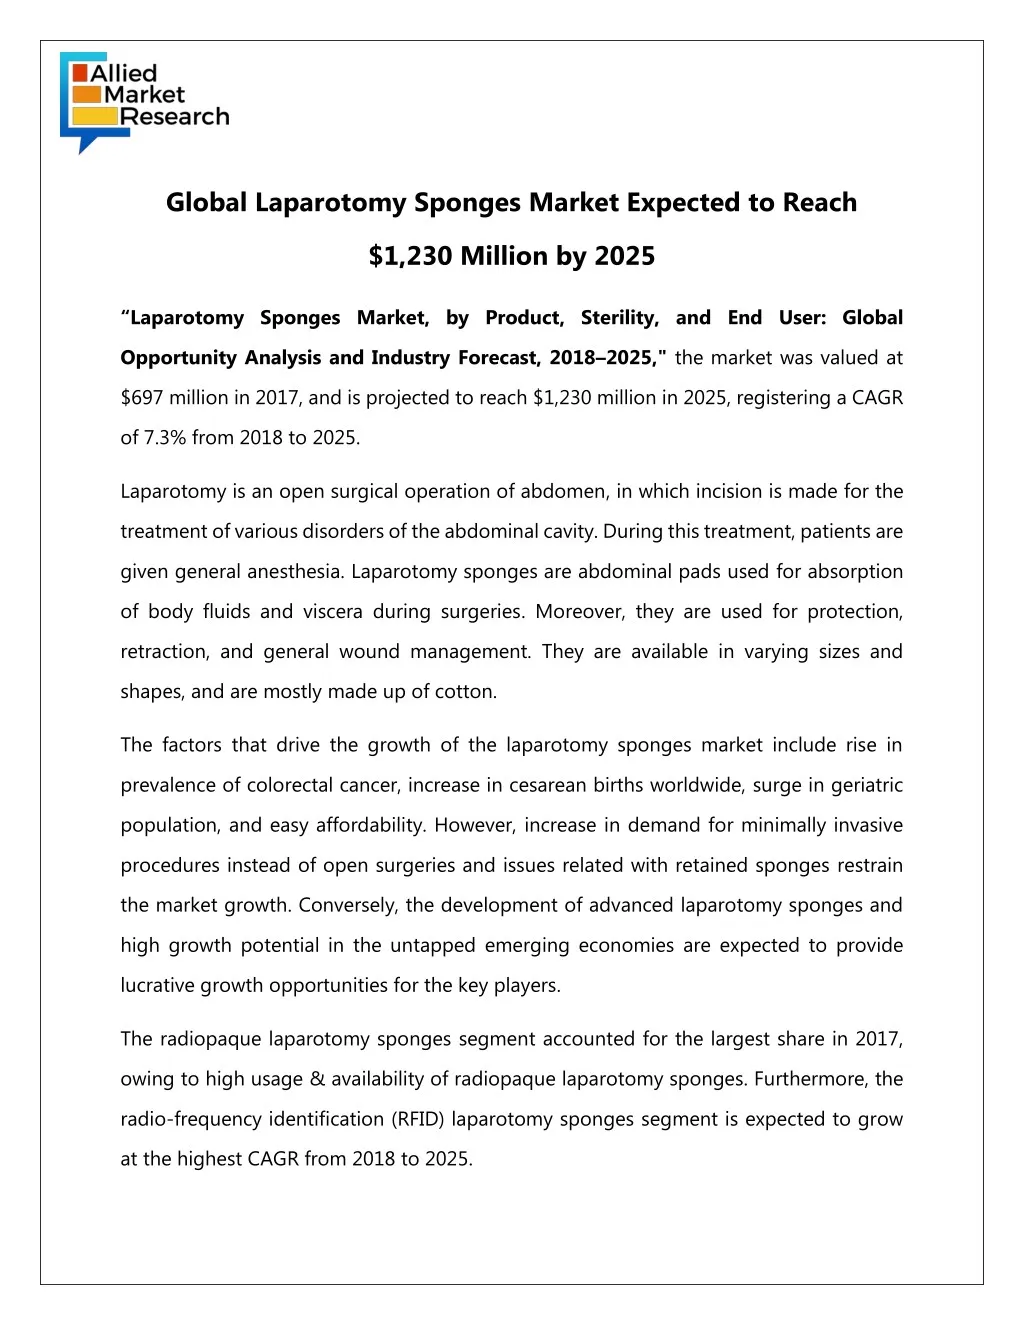 global laparotomy sponges market expected to reach